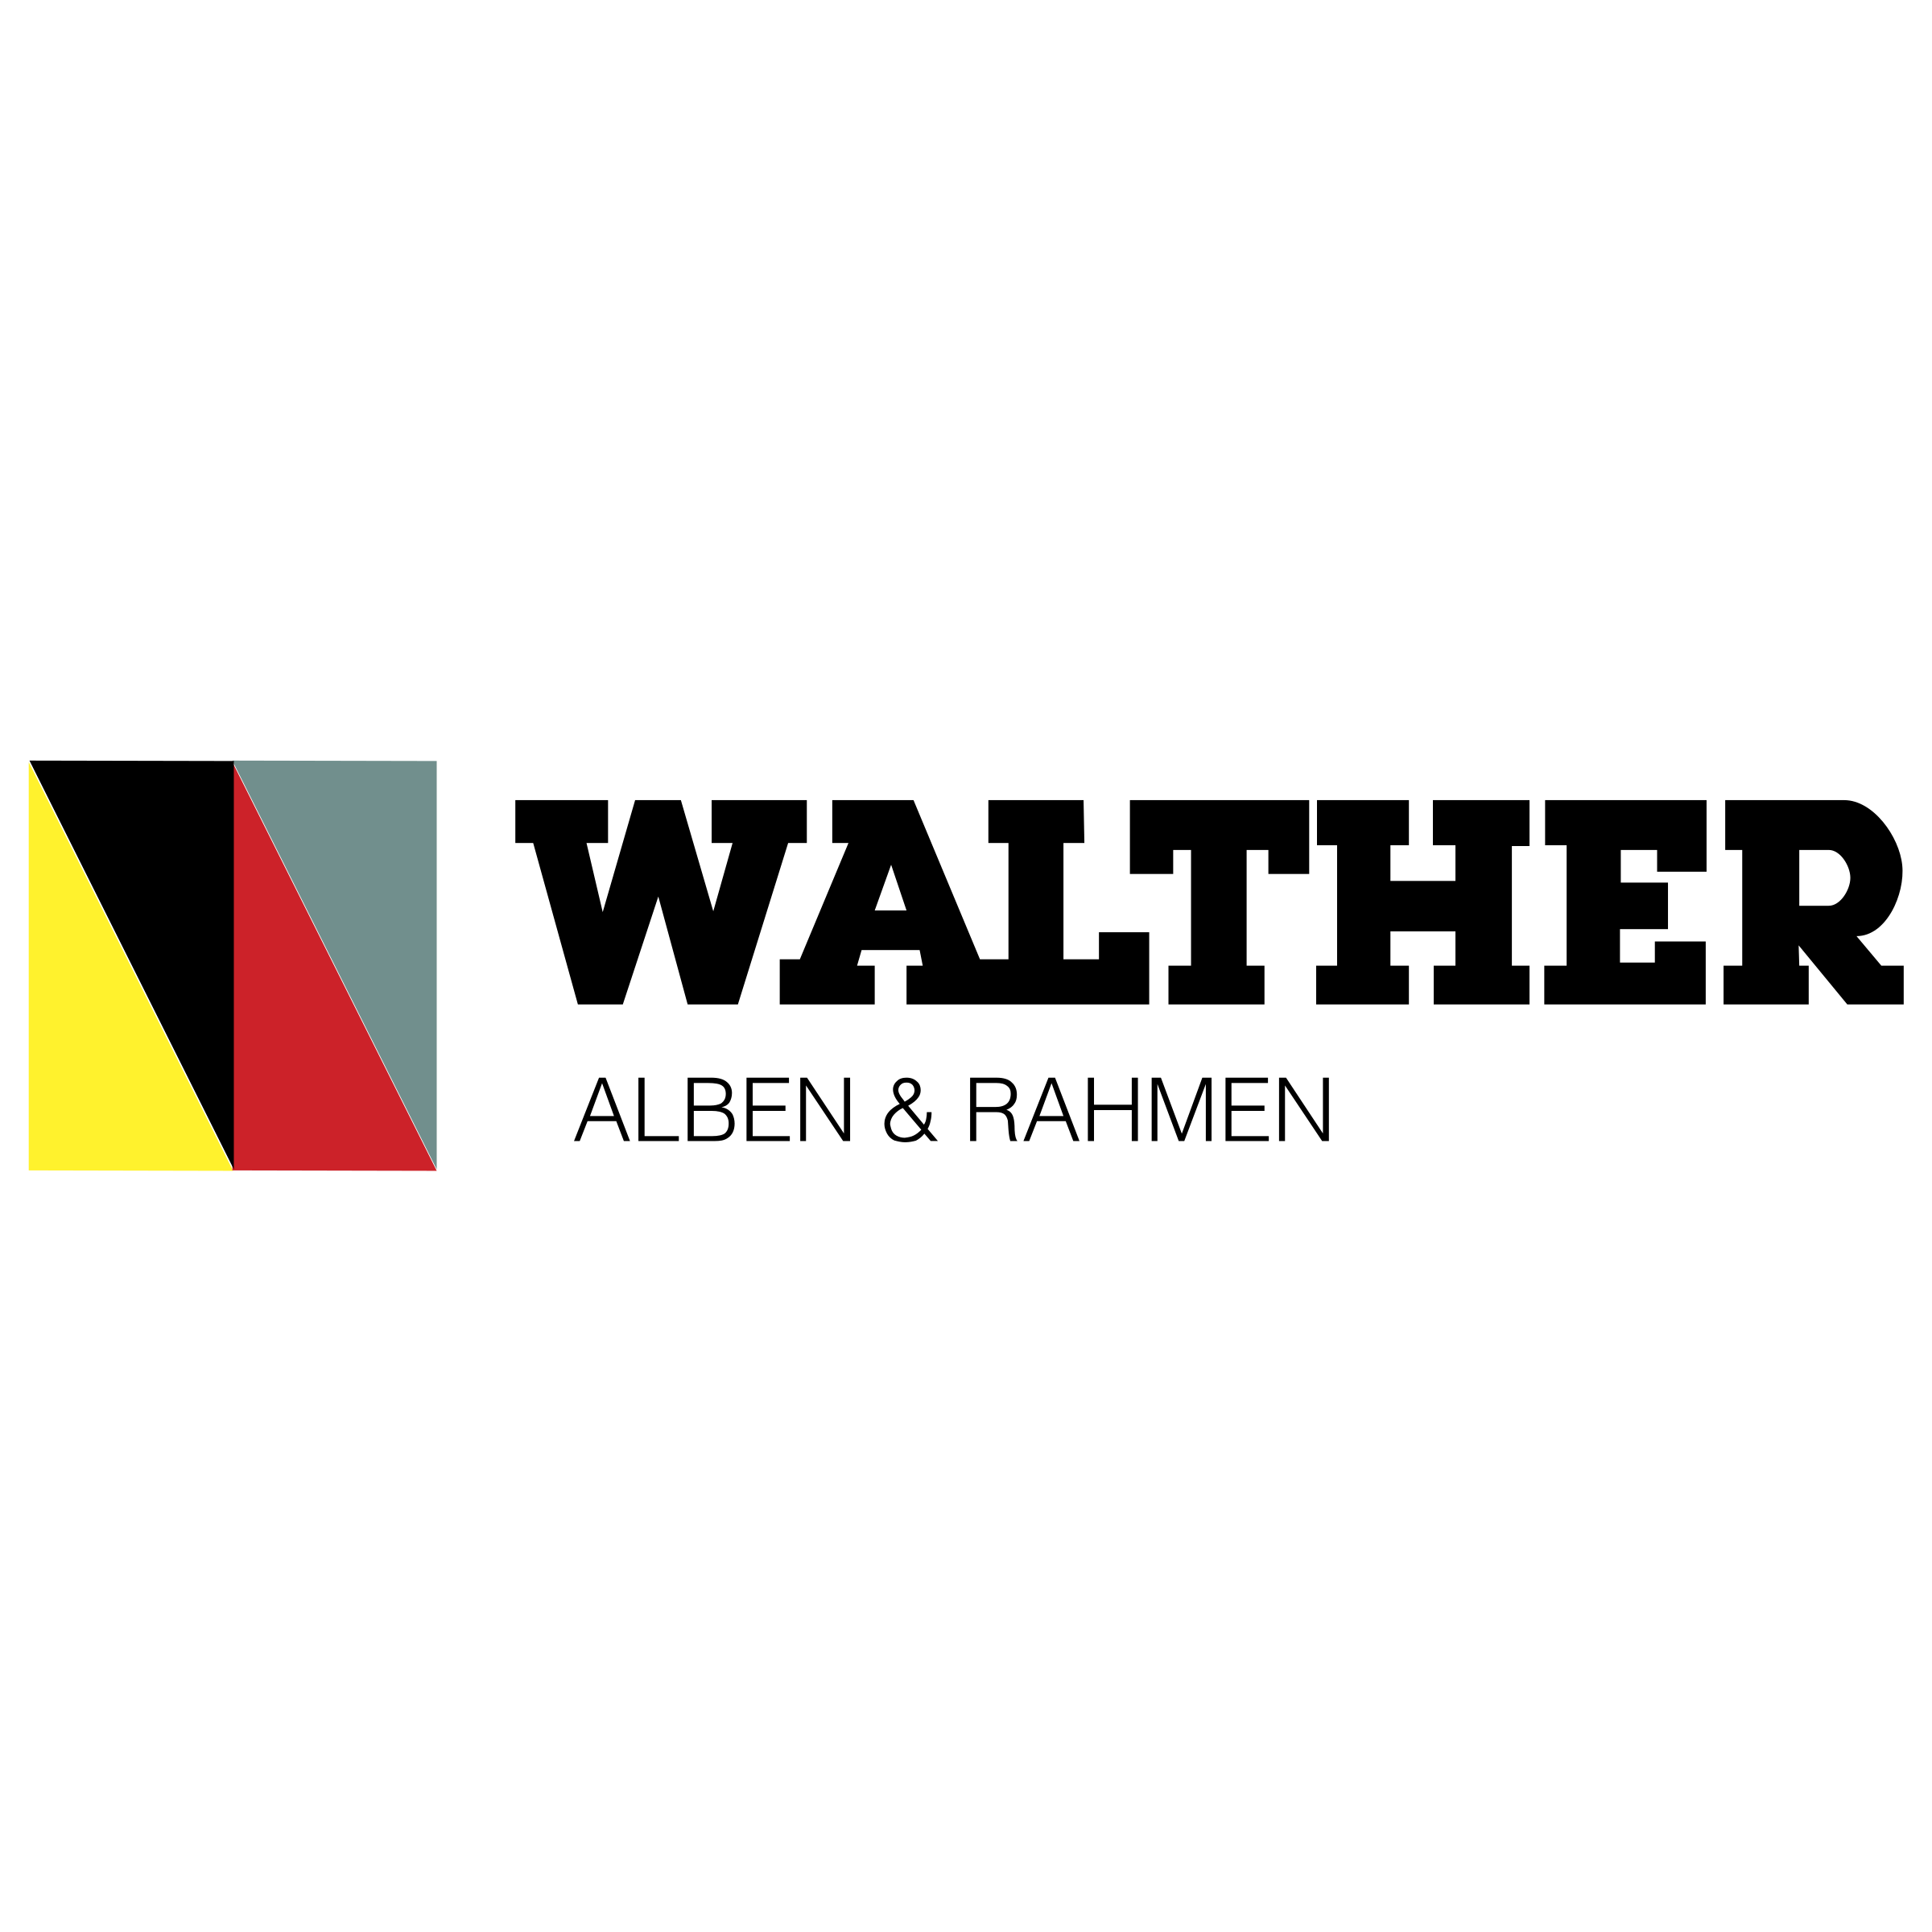 Walther Logo - Walther Logo PNG Transparent & SVG Vector